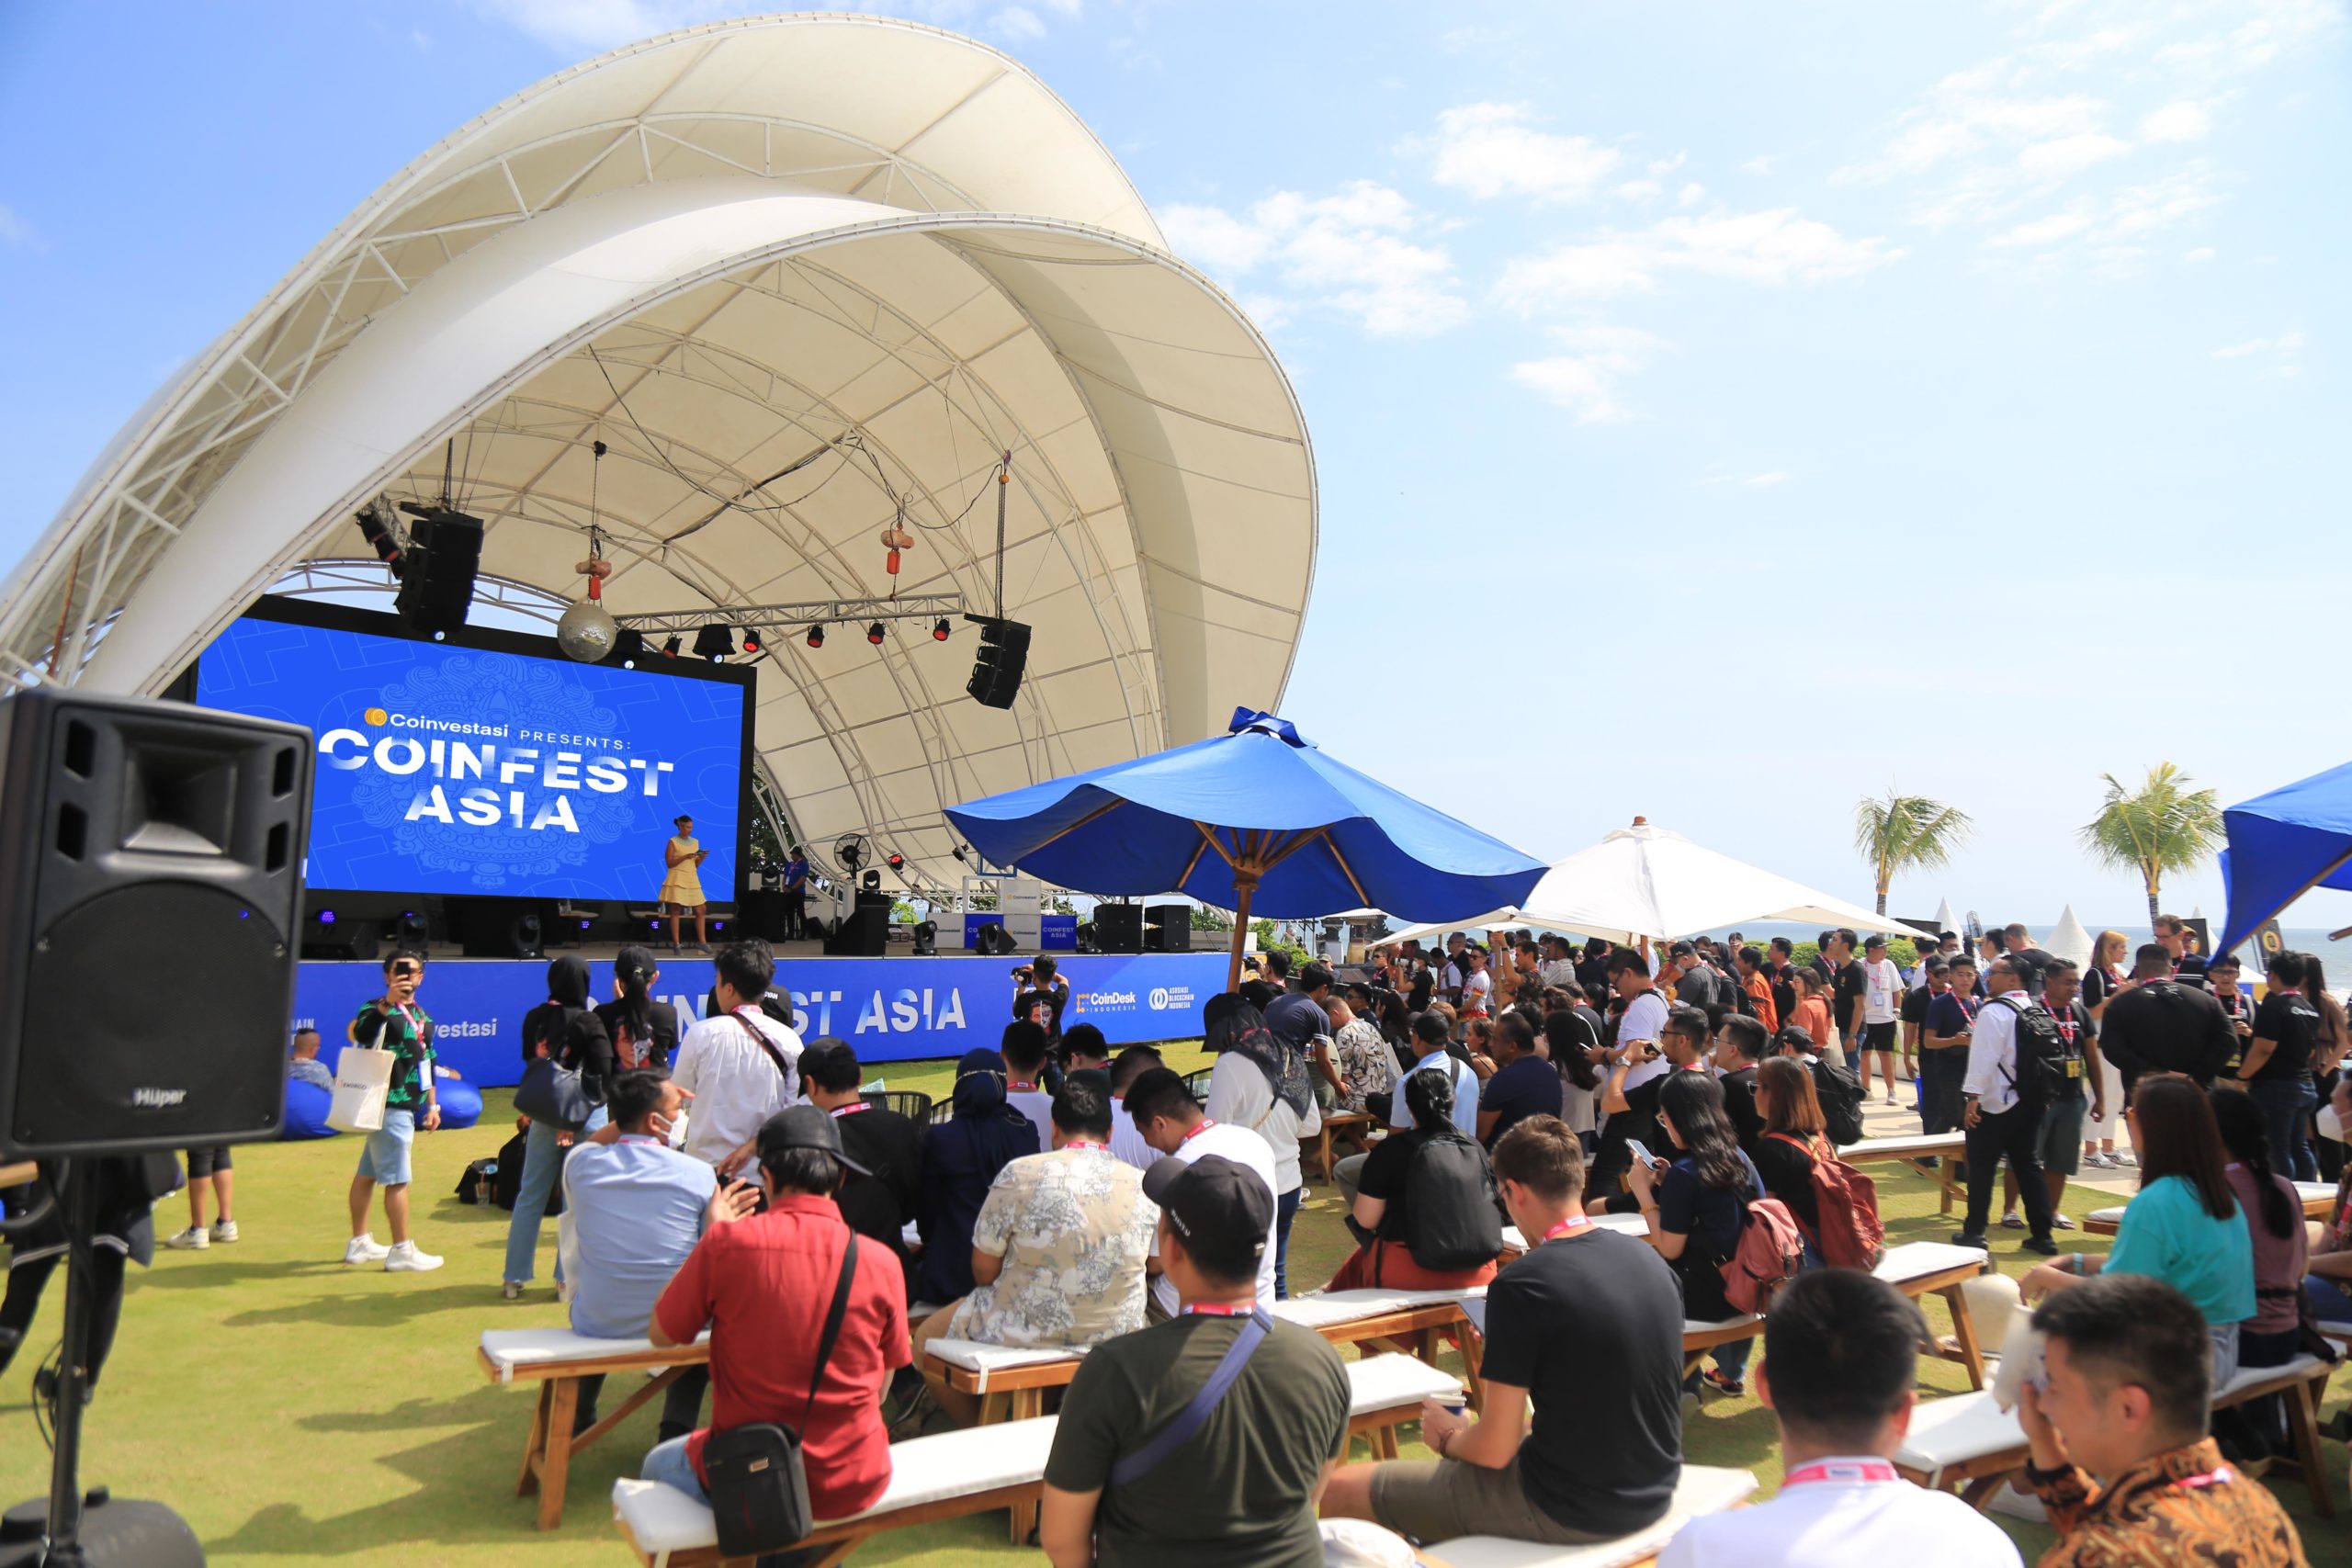 Coinfest Asia Crypto Festival Sukses Besar! Dihadiri 1.500 Orang dari 52 Negara